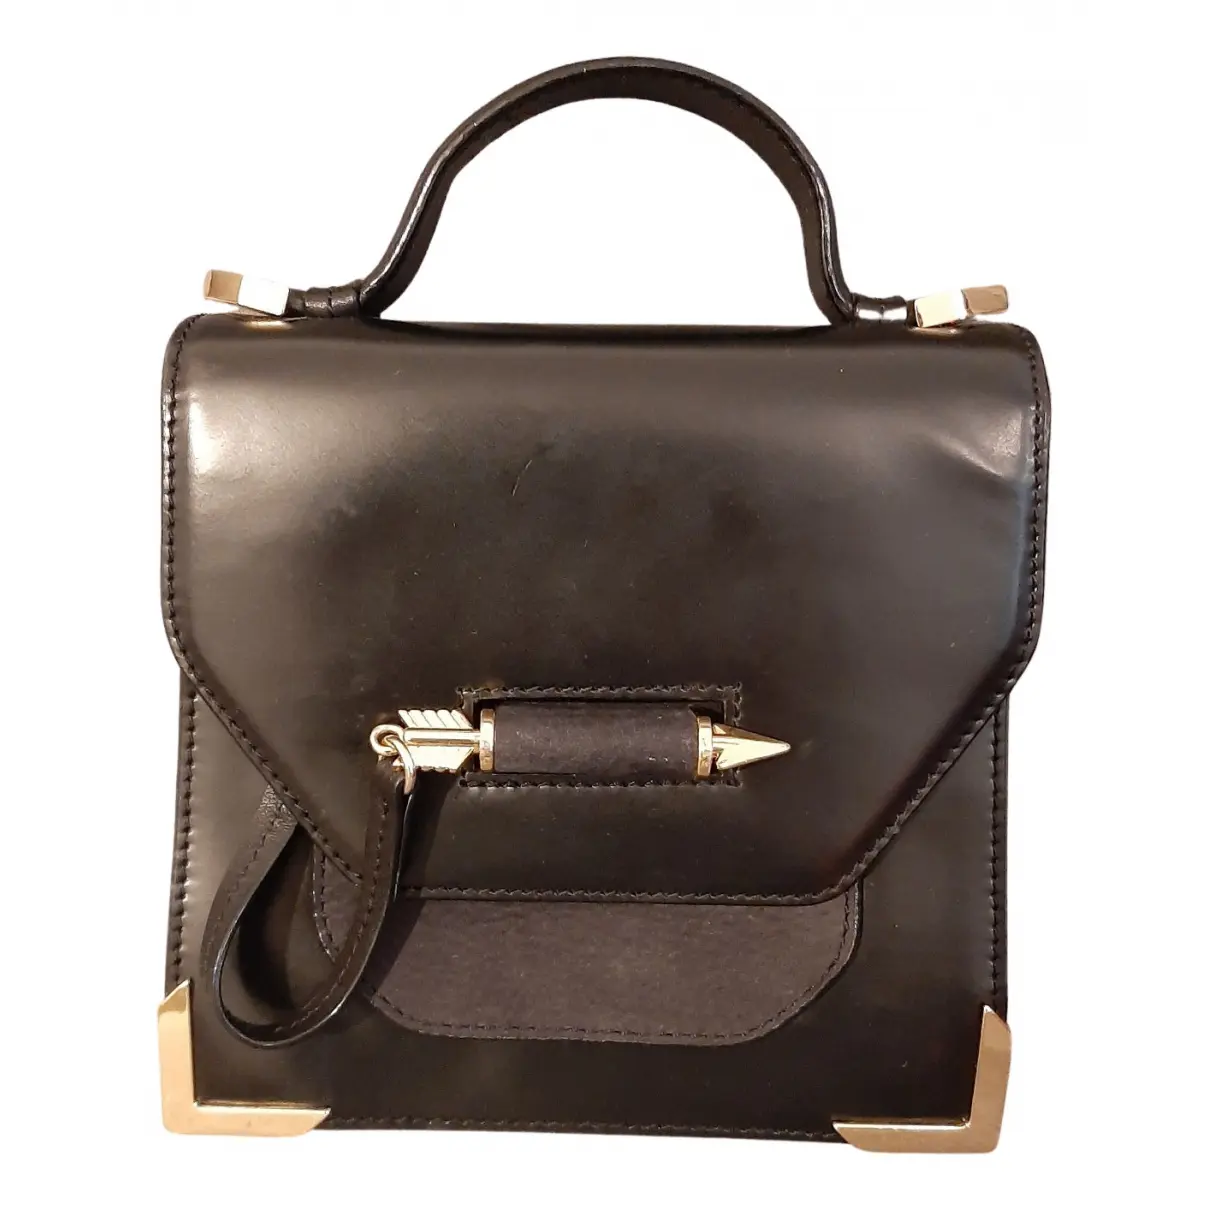 Leather handbag Mackage